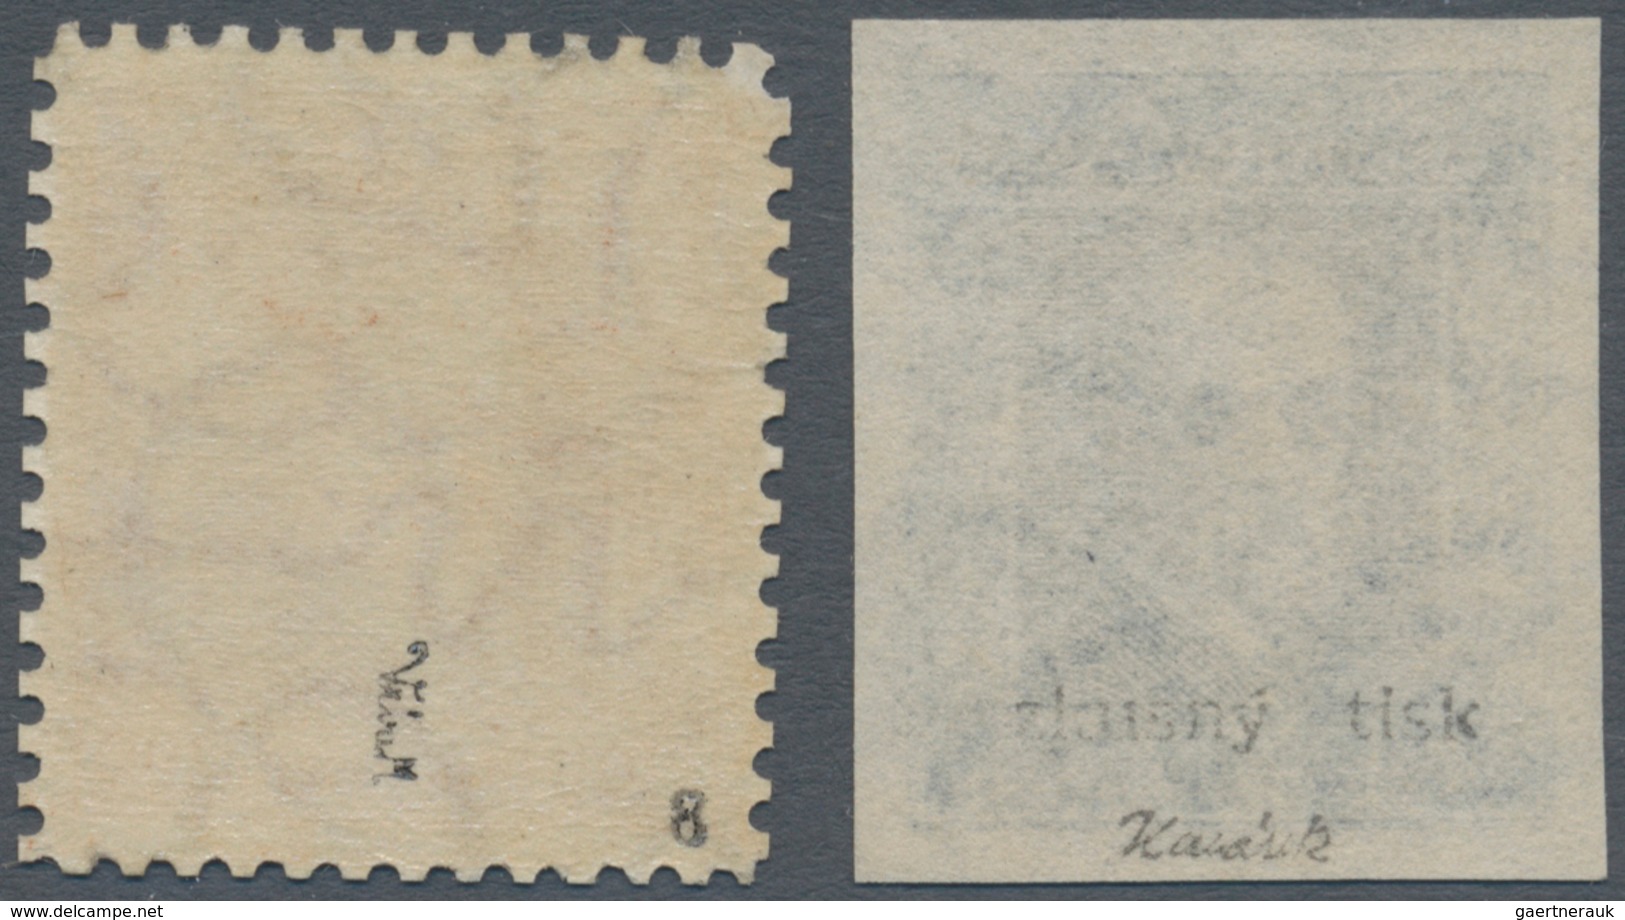 01721 Tschechoslowakei: 1923, 5th Anniversary Of Republic 200h.+200h. "Masaryk", Two Proofs In Issued Desi - Brieven En Documenten